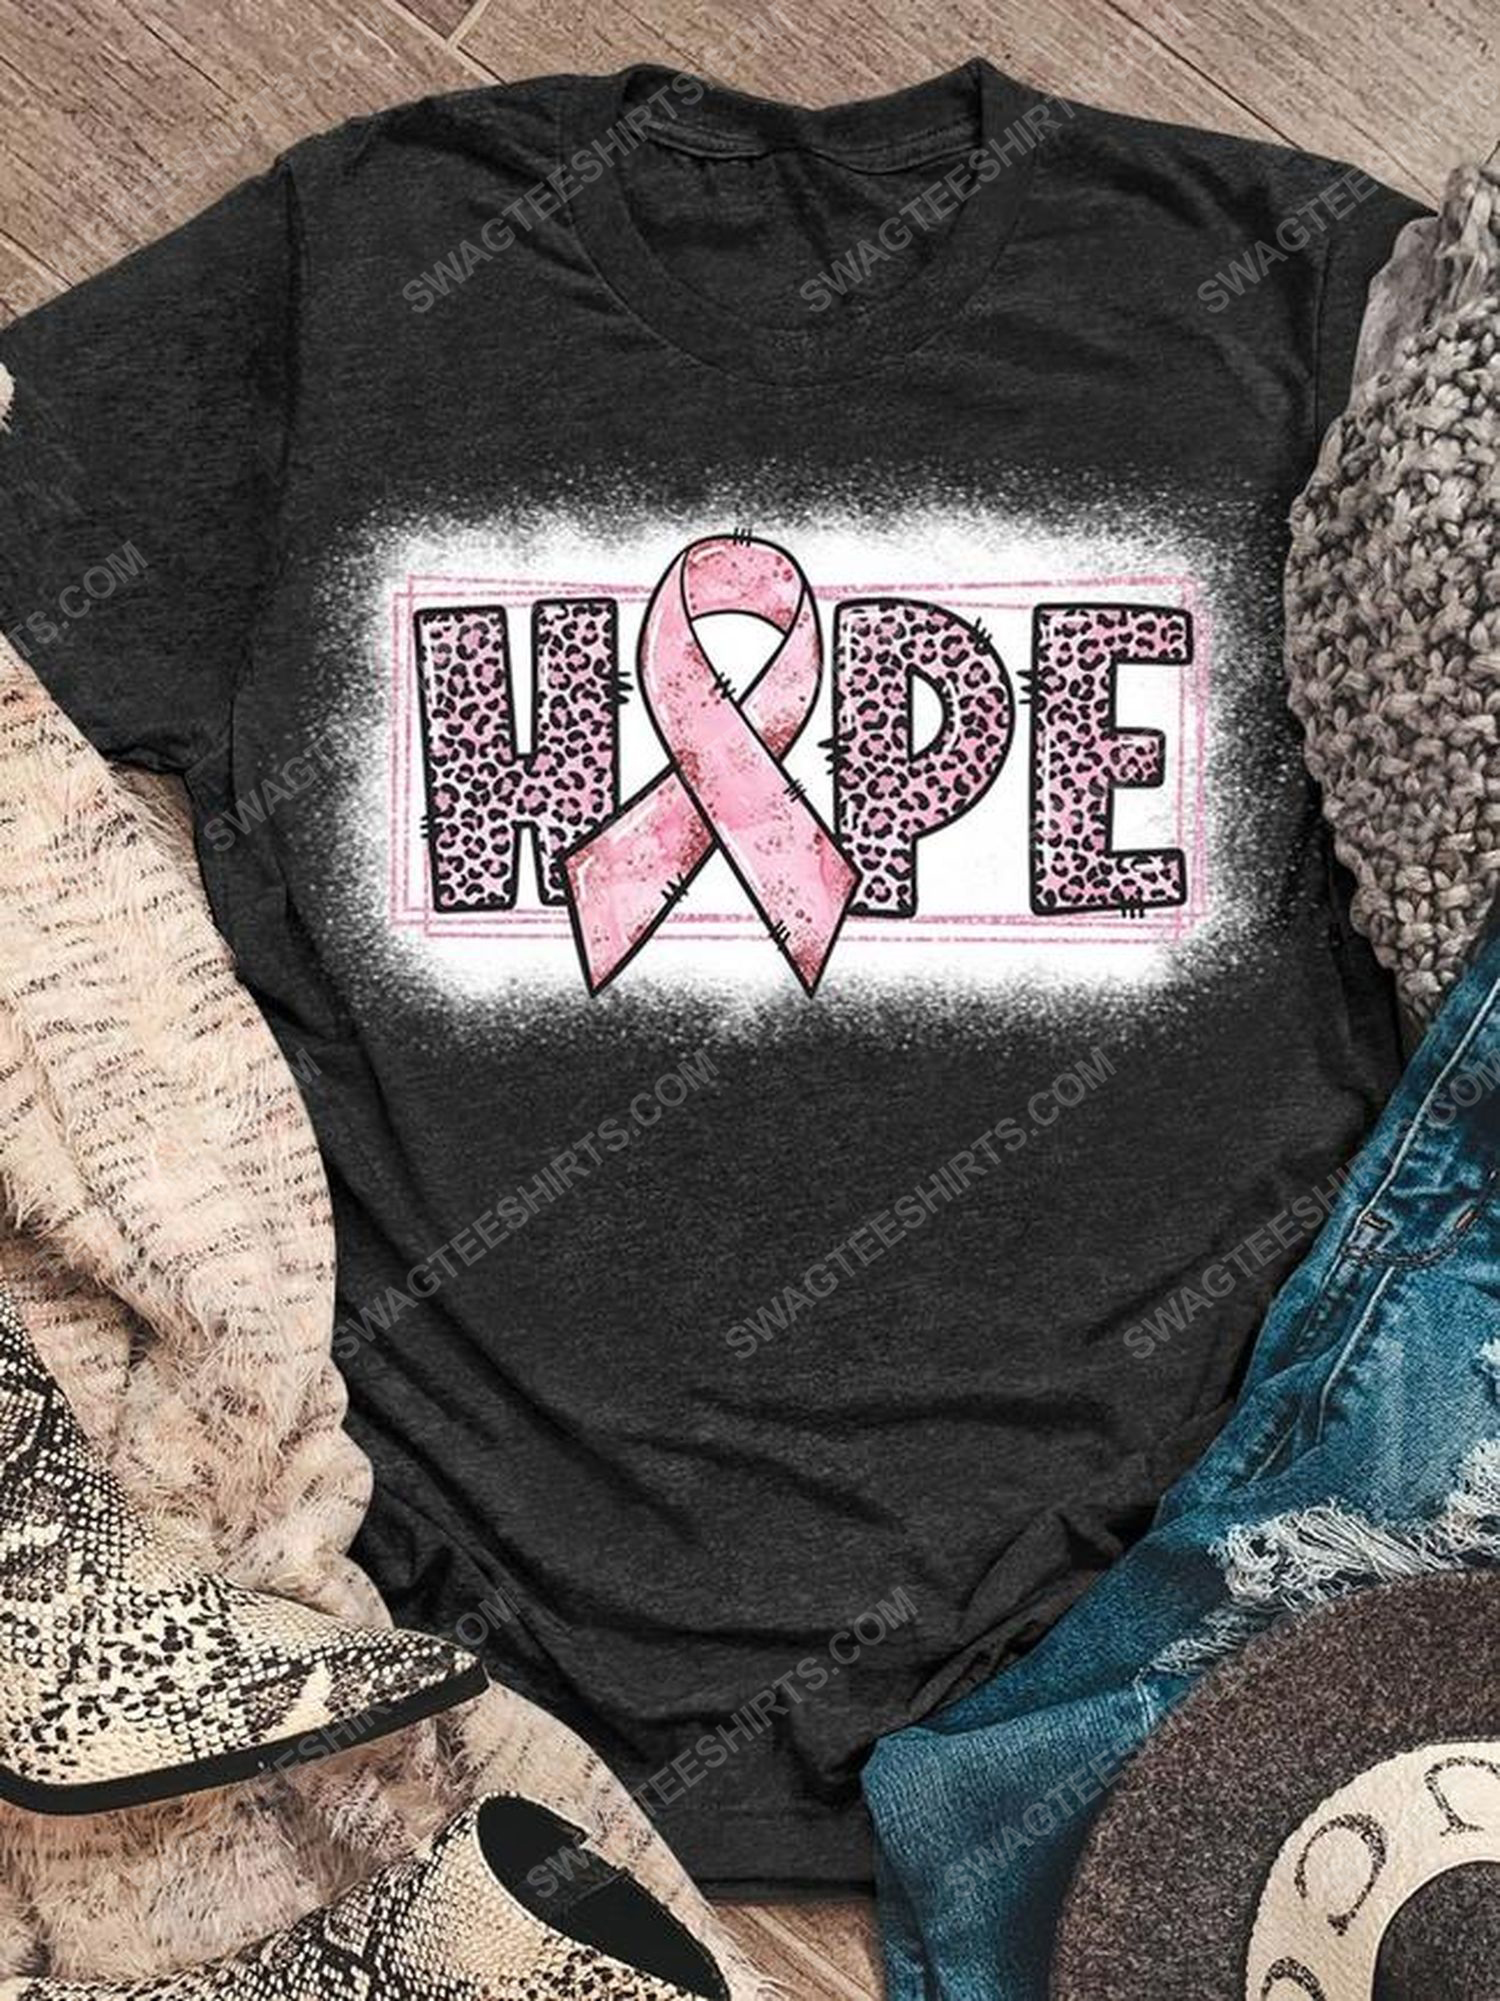 Breast cancer awareness hope leopard shirt 1 - Copy (2)